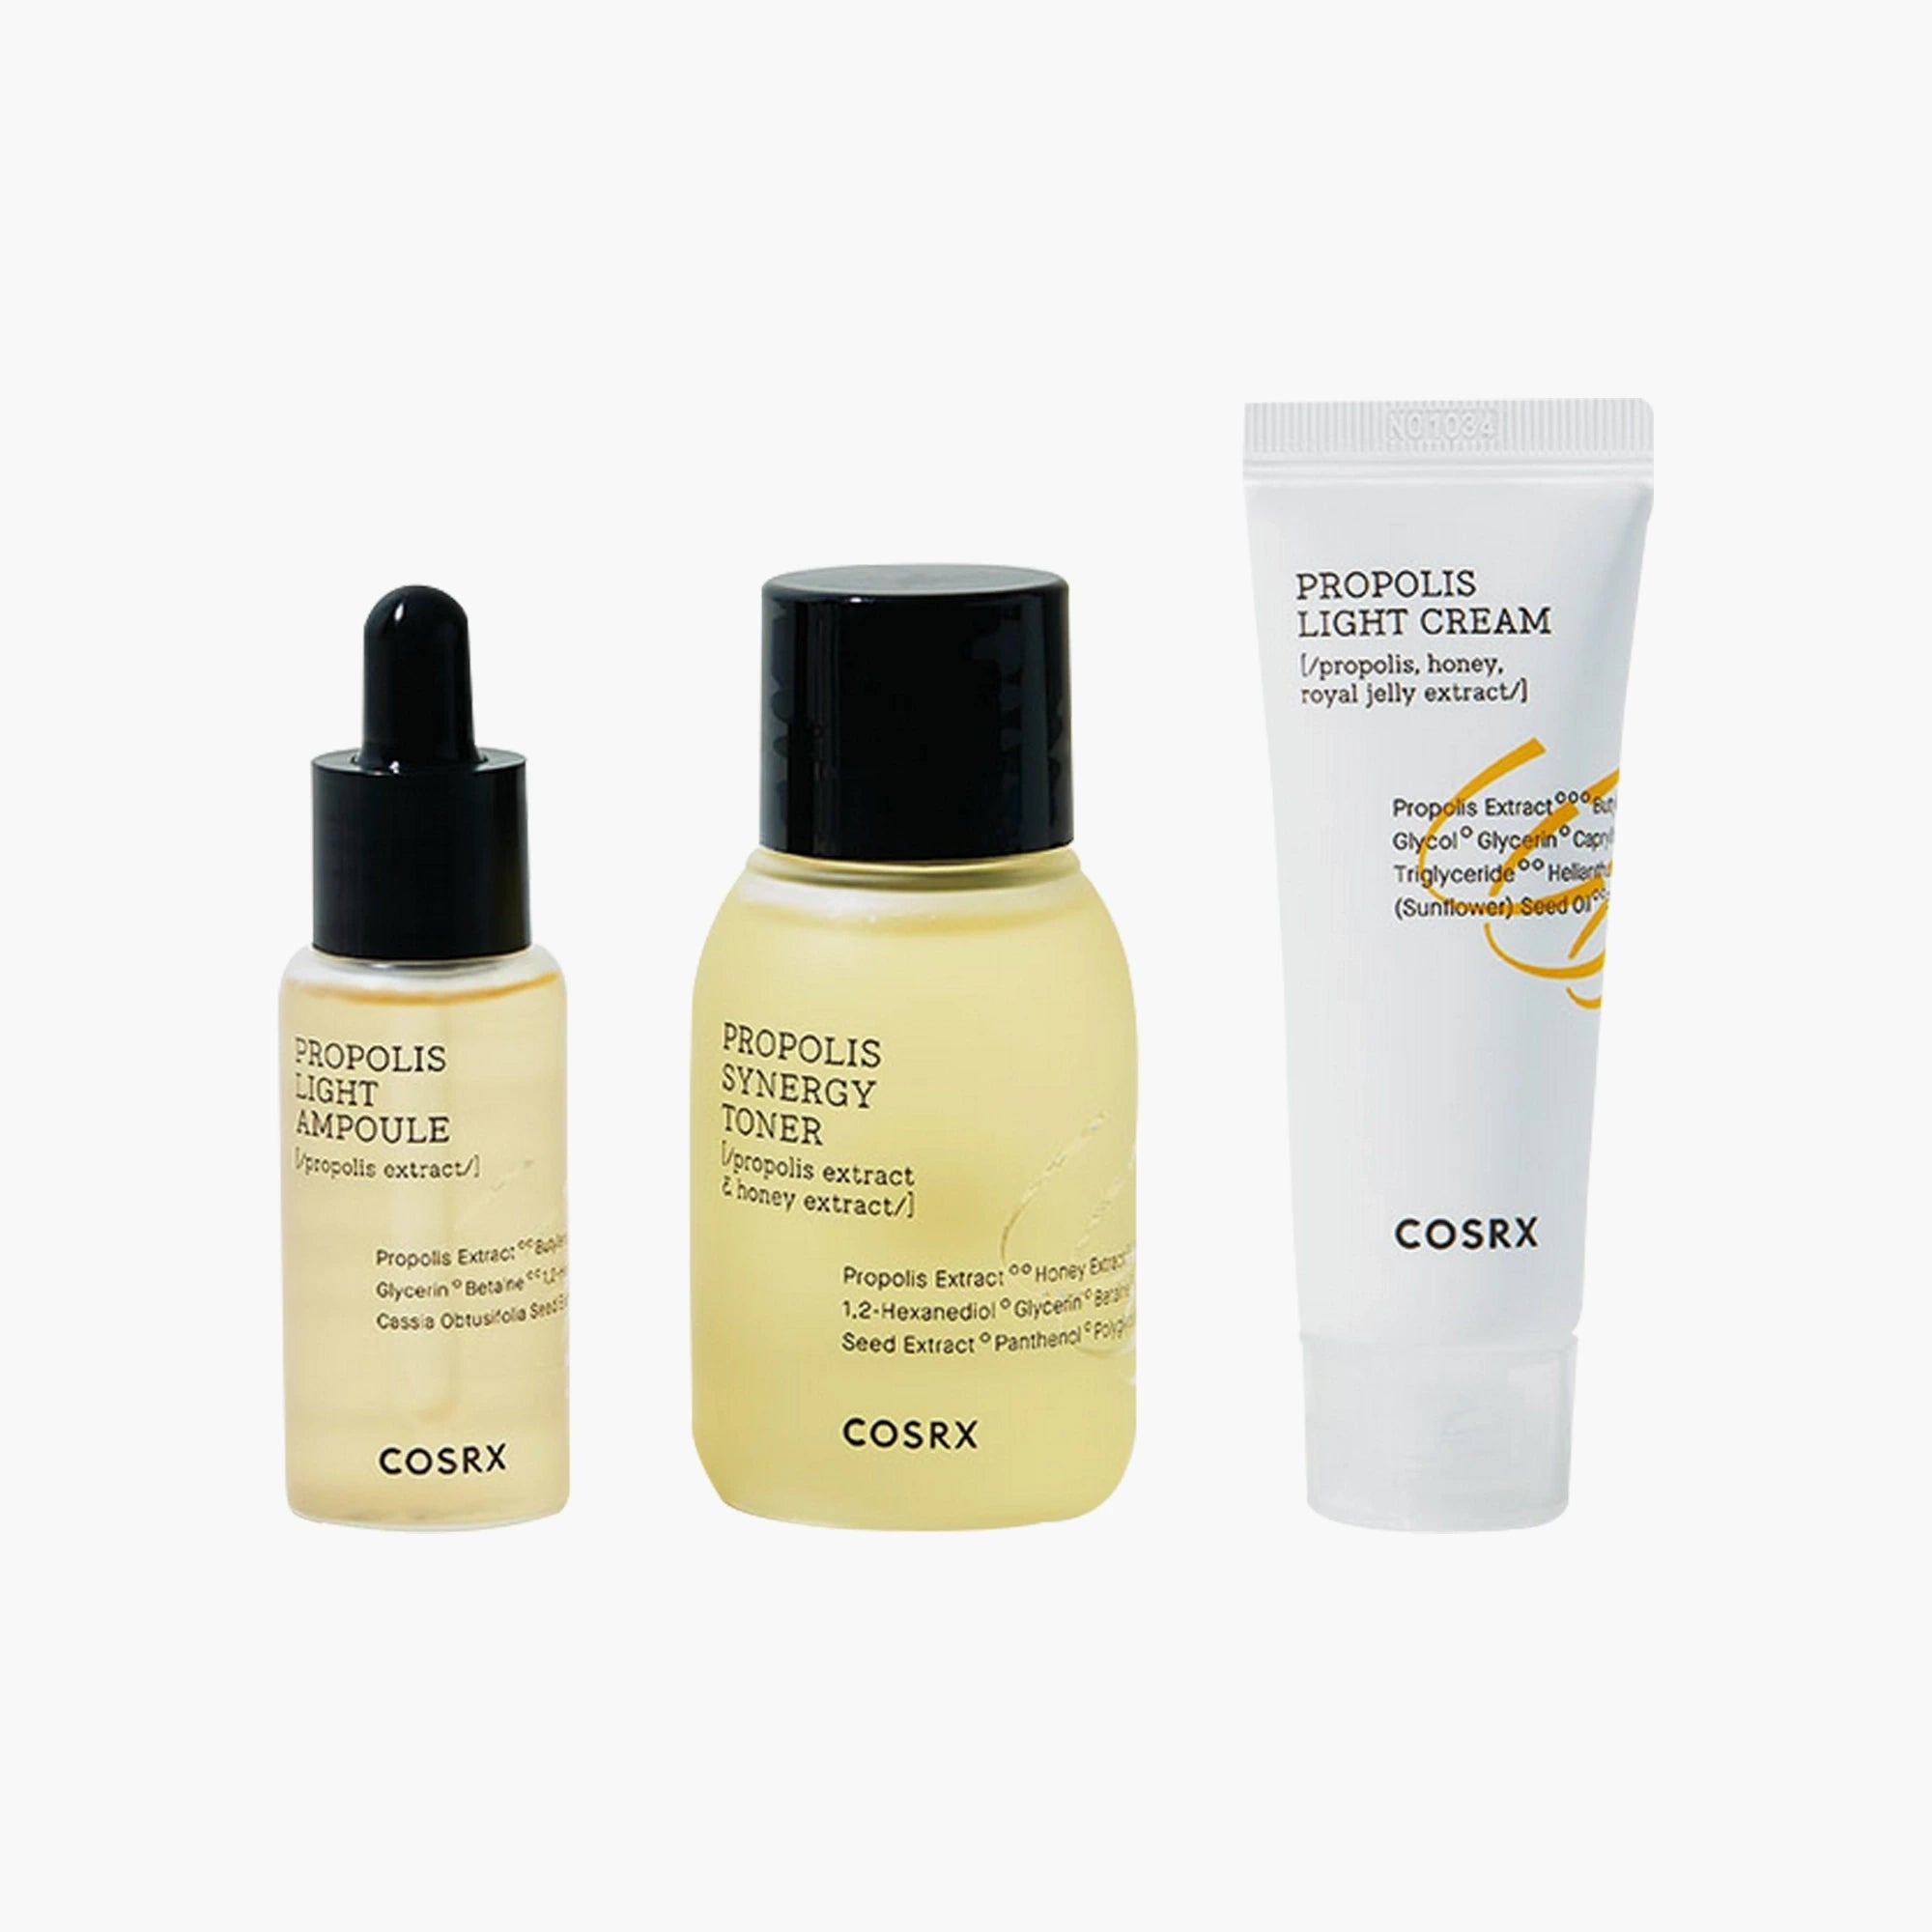 COSRX Honey Glow Kit 3 Step 3ea